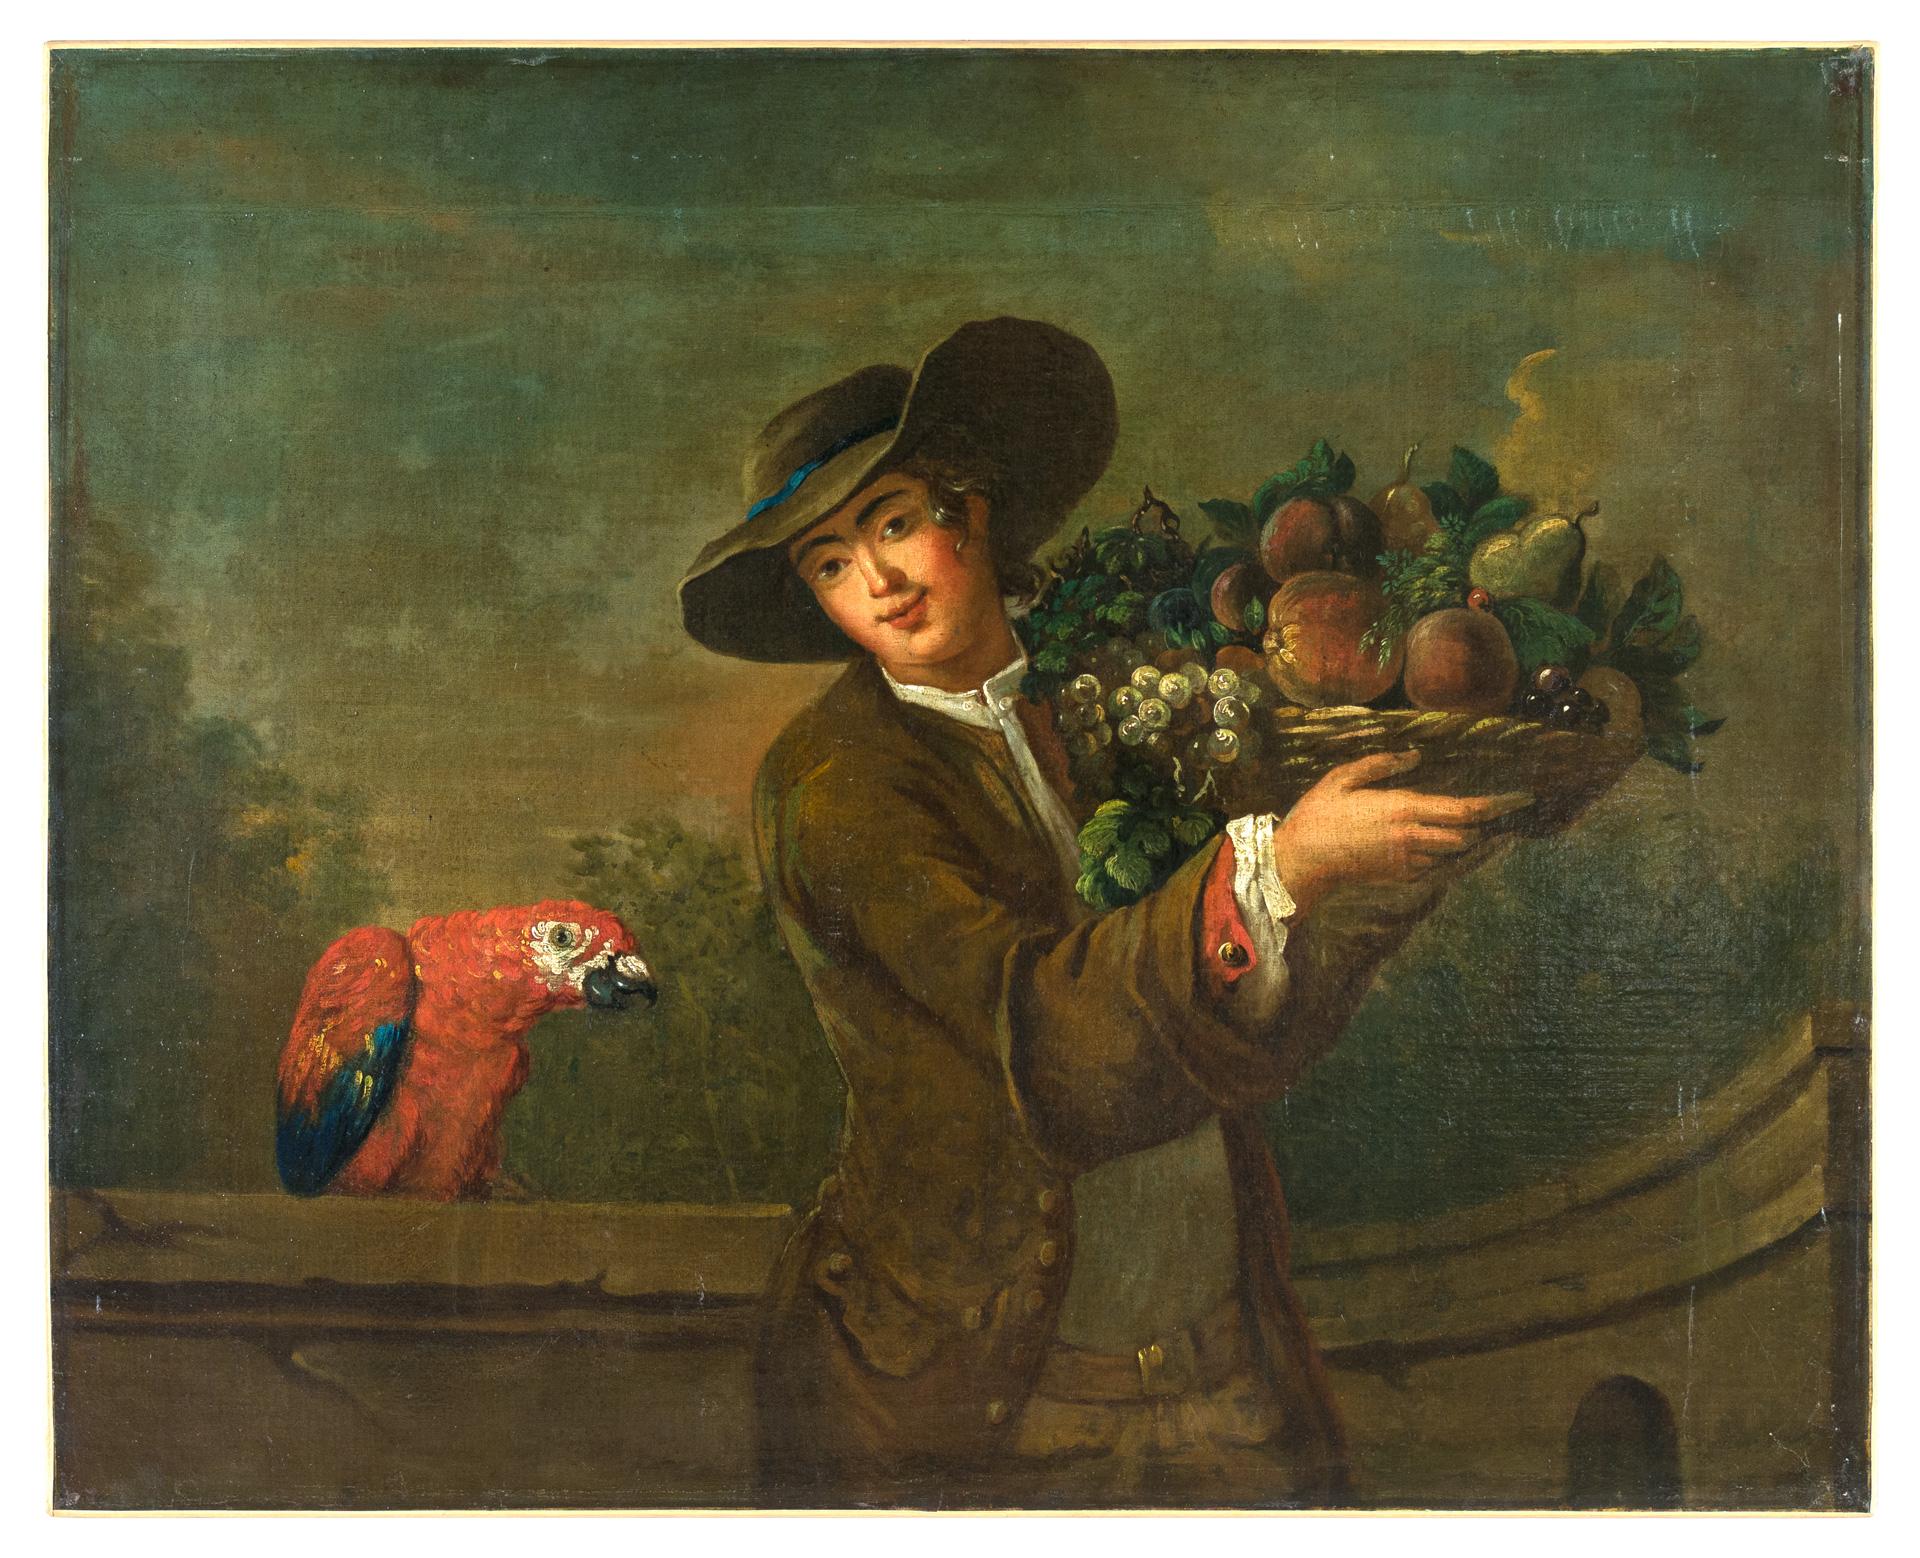  18th century European figure painting - Dandy parrot - Oil on canvas Rococò